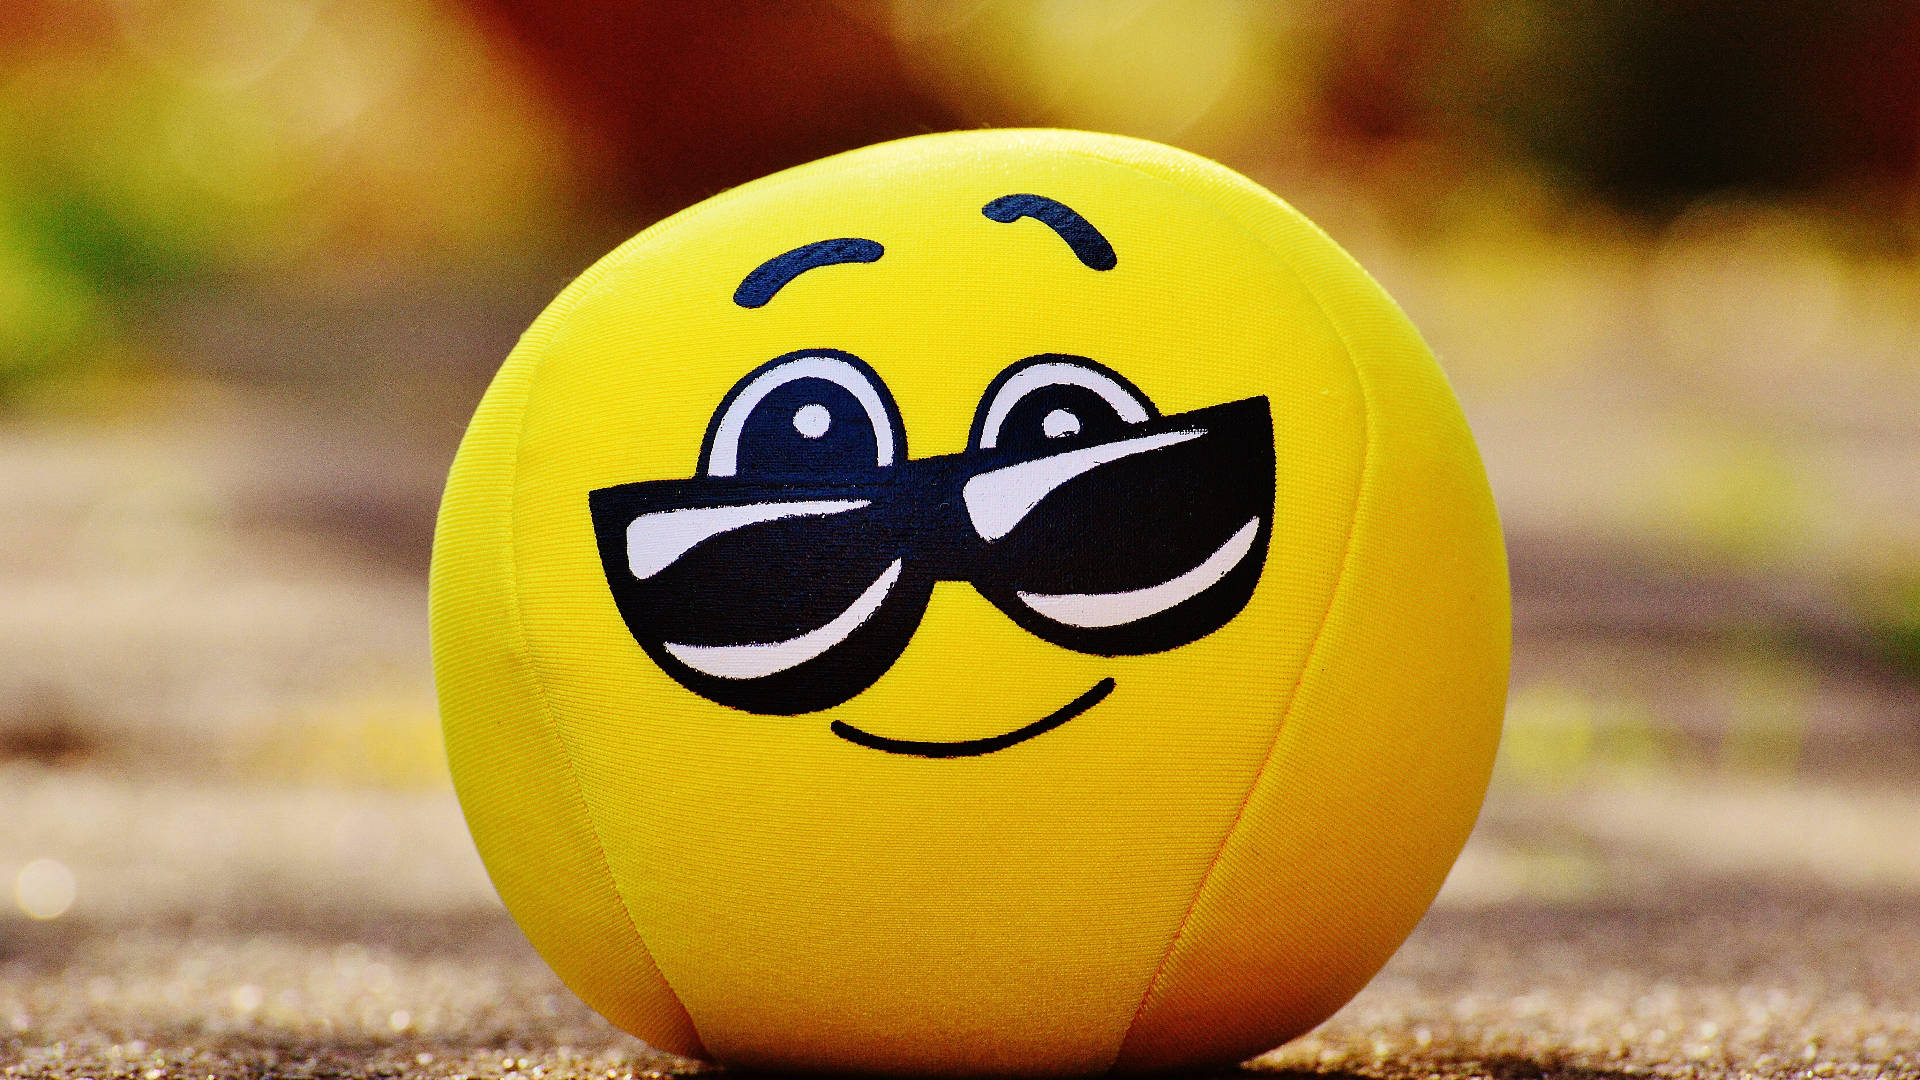 Cool Cute Yellow Emoji Ball Background